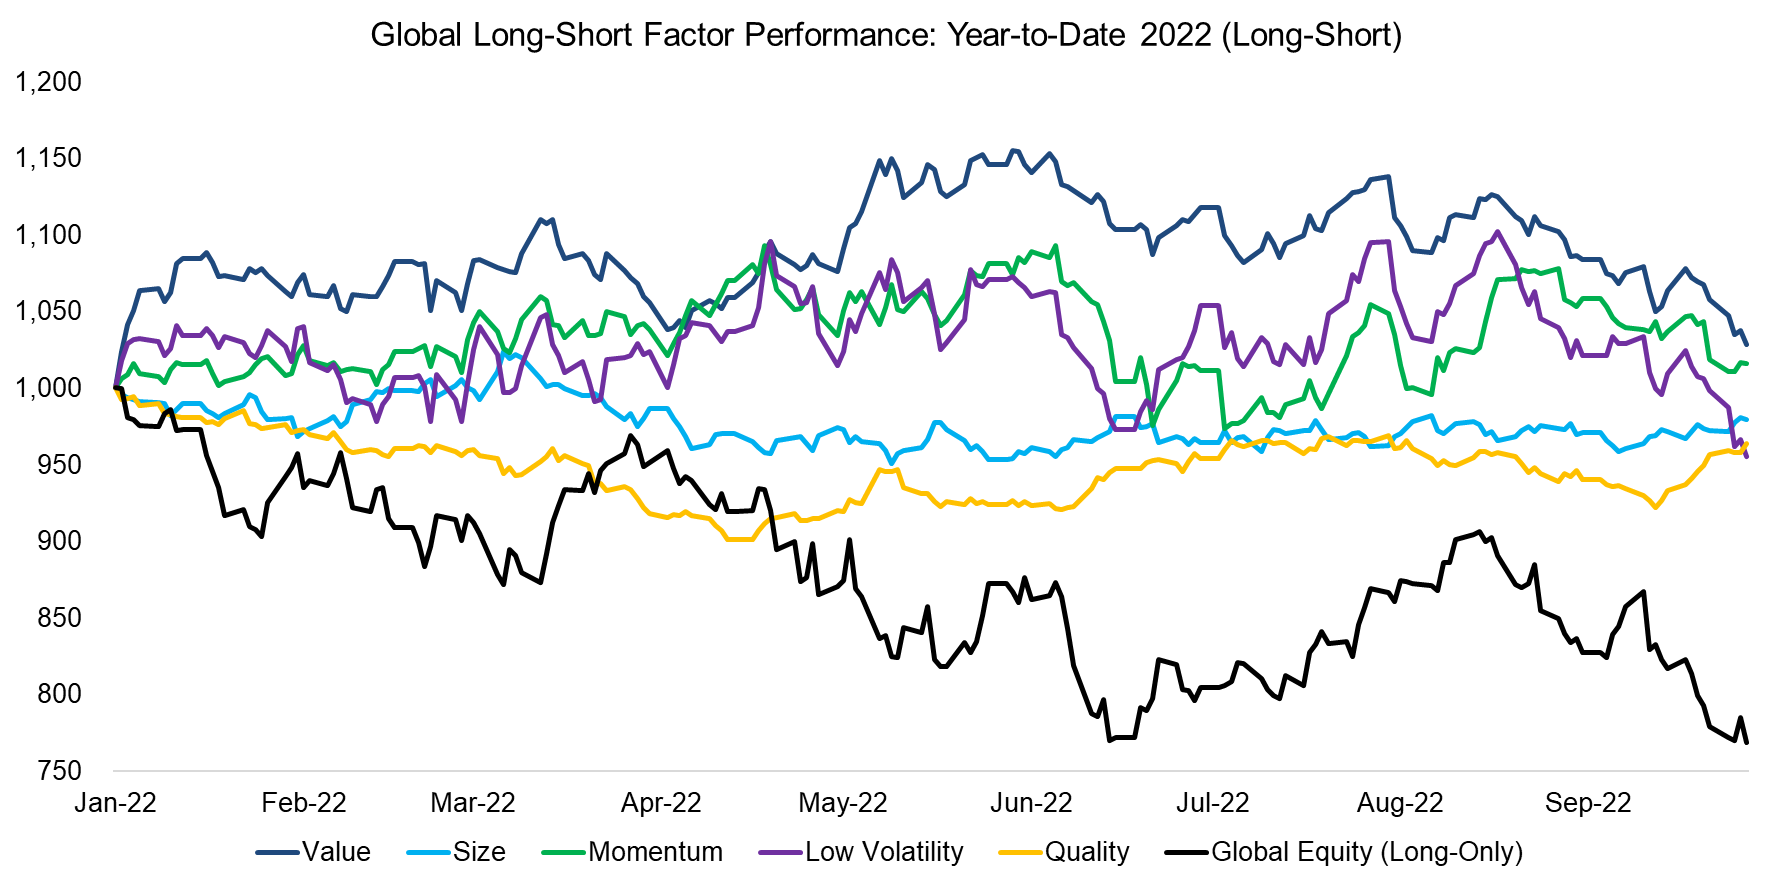 Global Long-Short Factor Performance Year-to-Date 2022 (Long-Short)